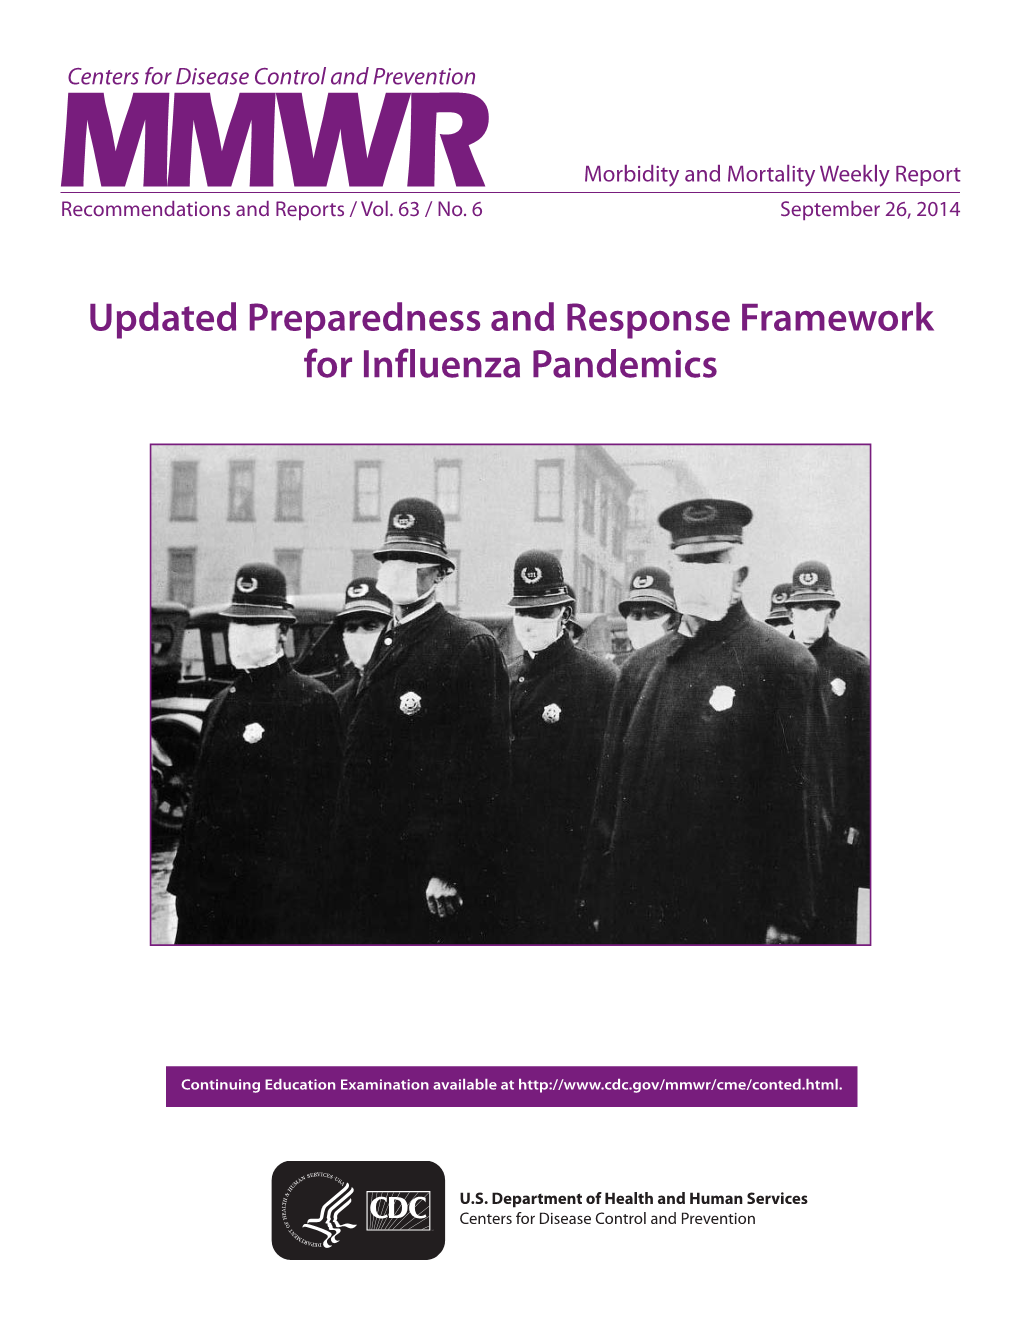 Updated Preparedness and Response Framework for Influenza Pandemics